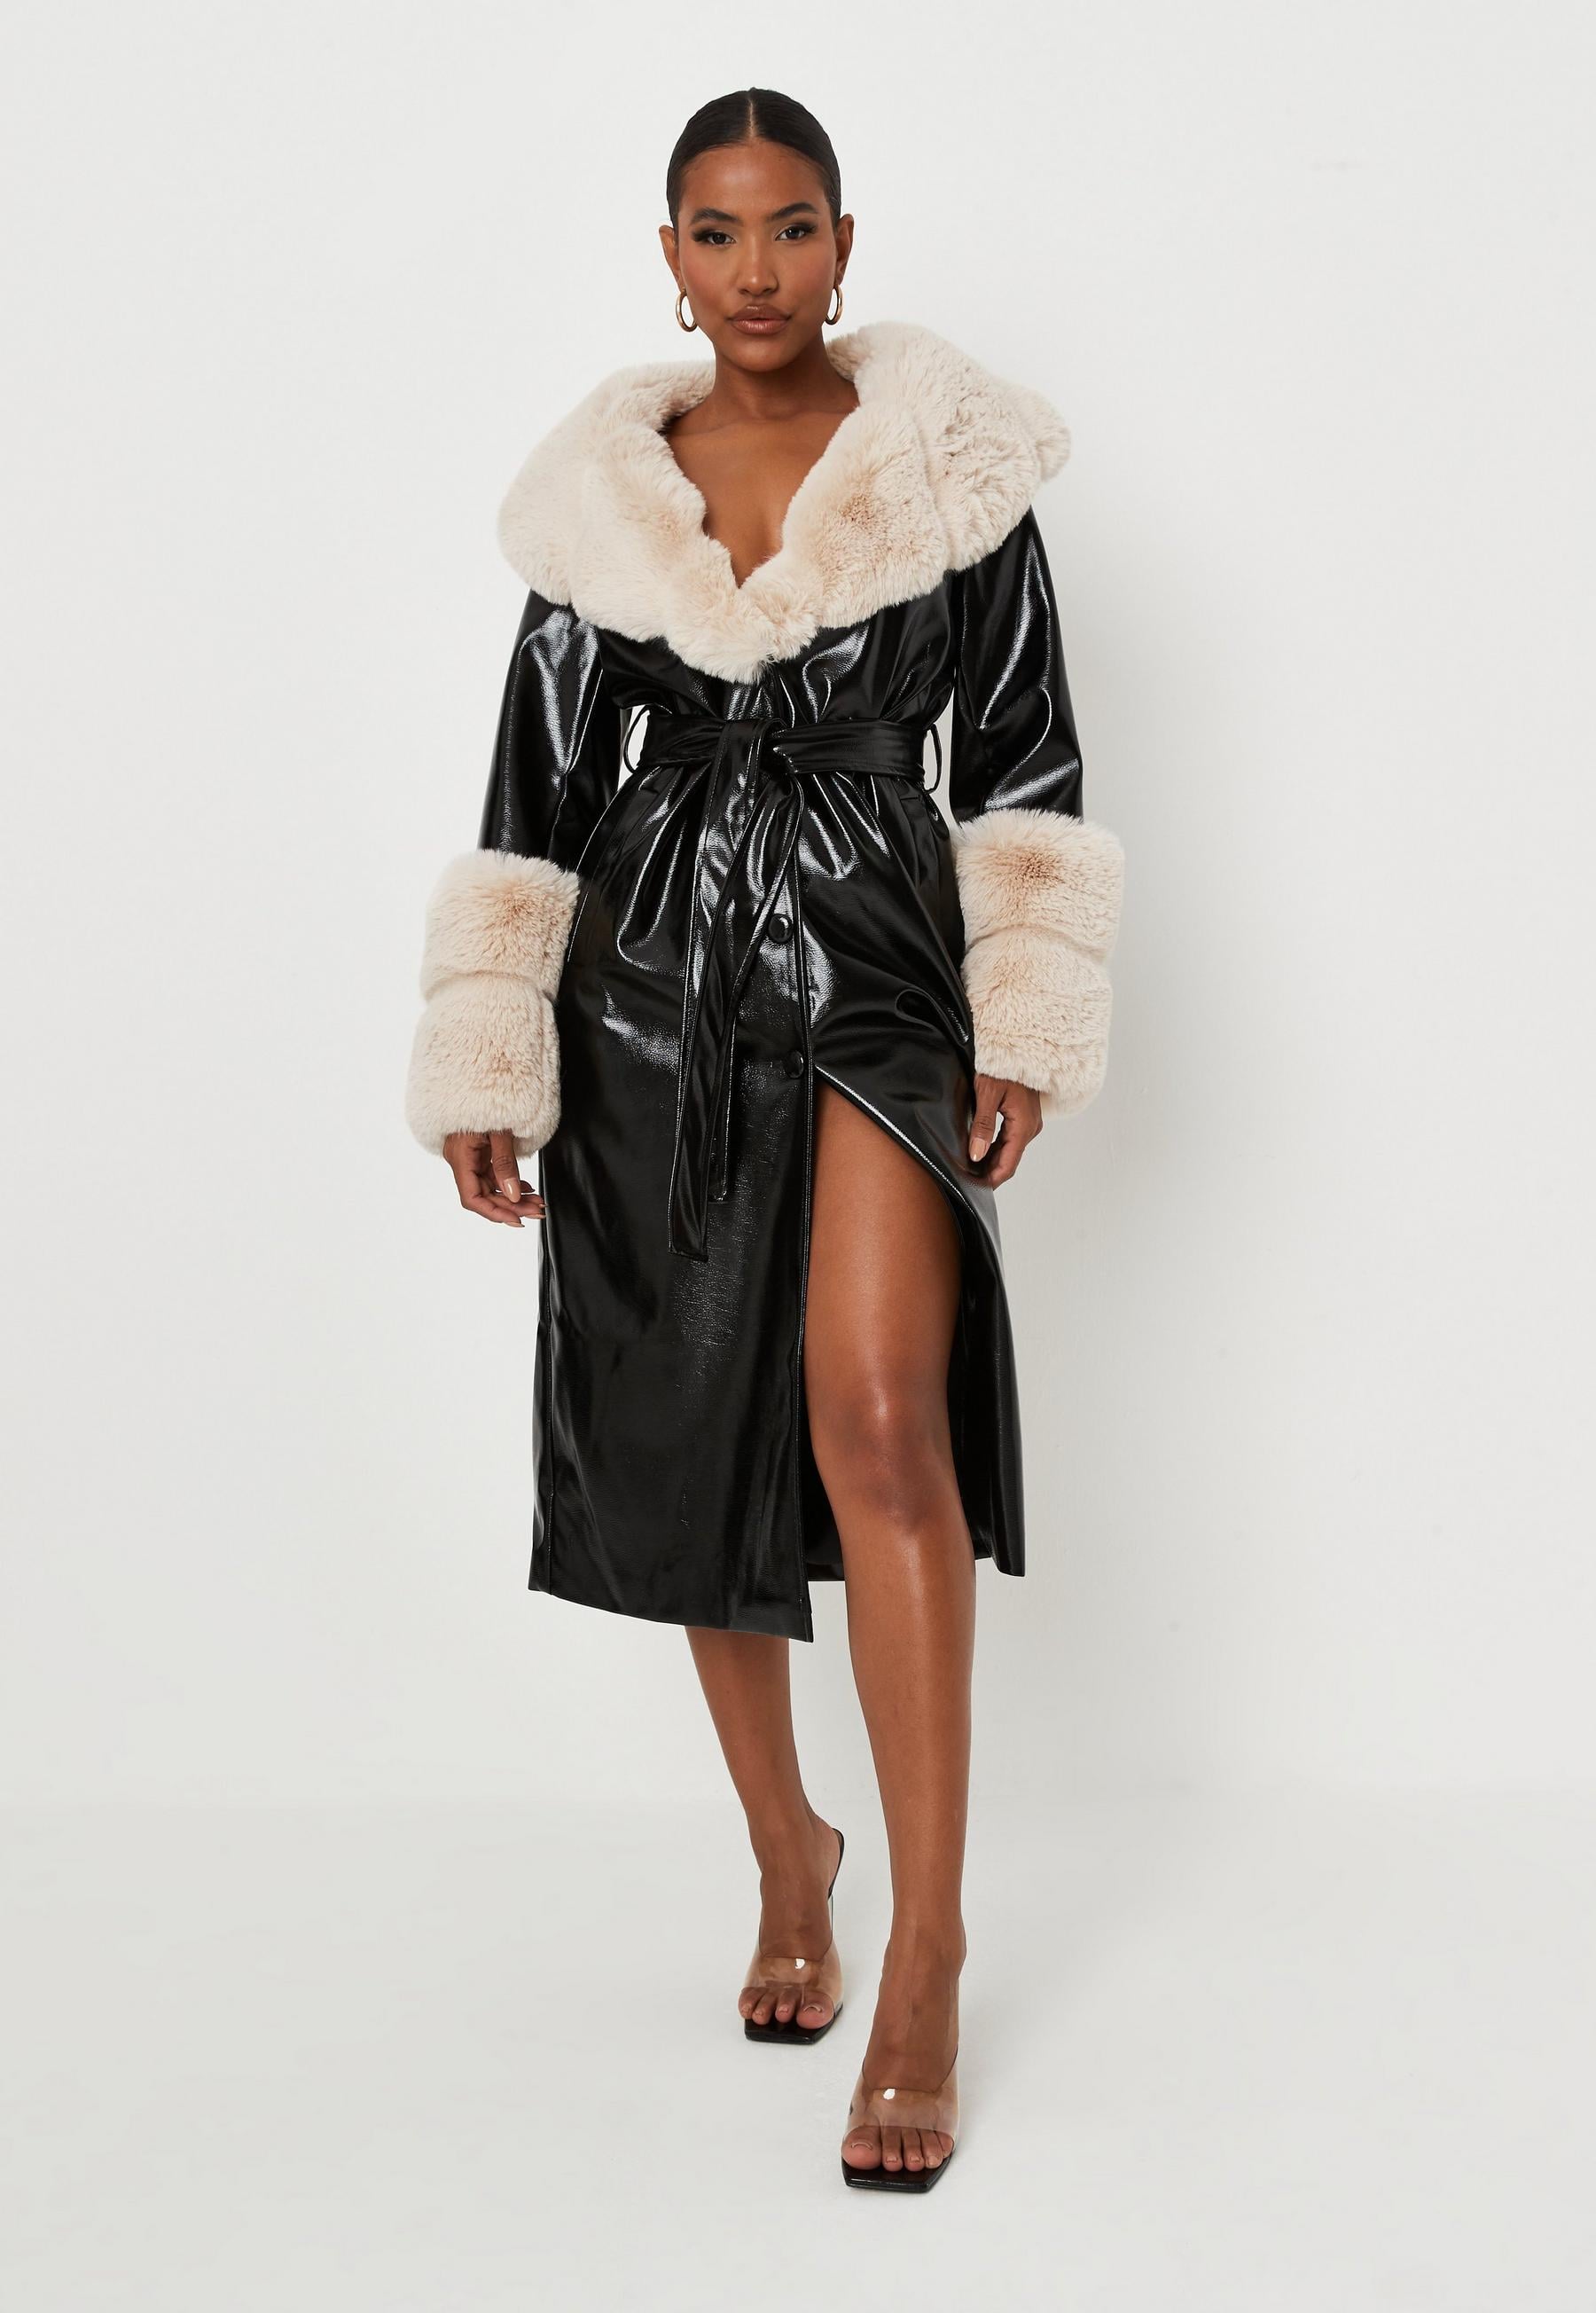 The Faux Fur Trimmed Top Is a Major 2021 Trend | POPSUGAR Fashion